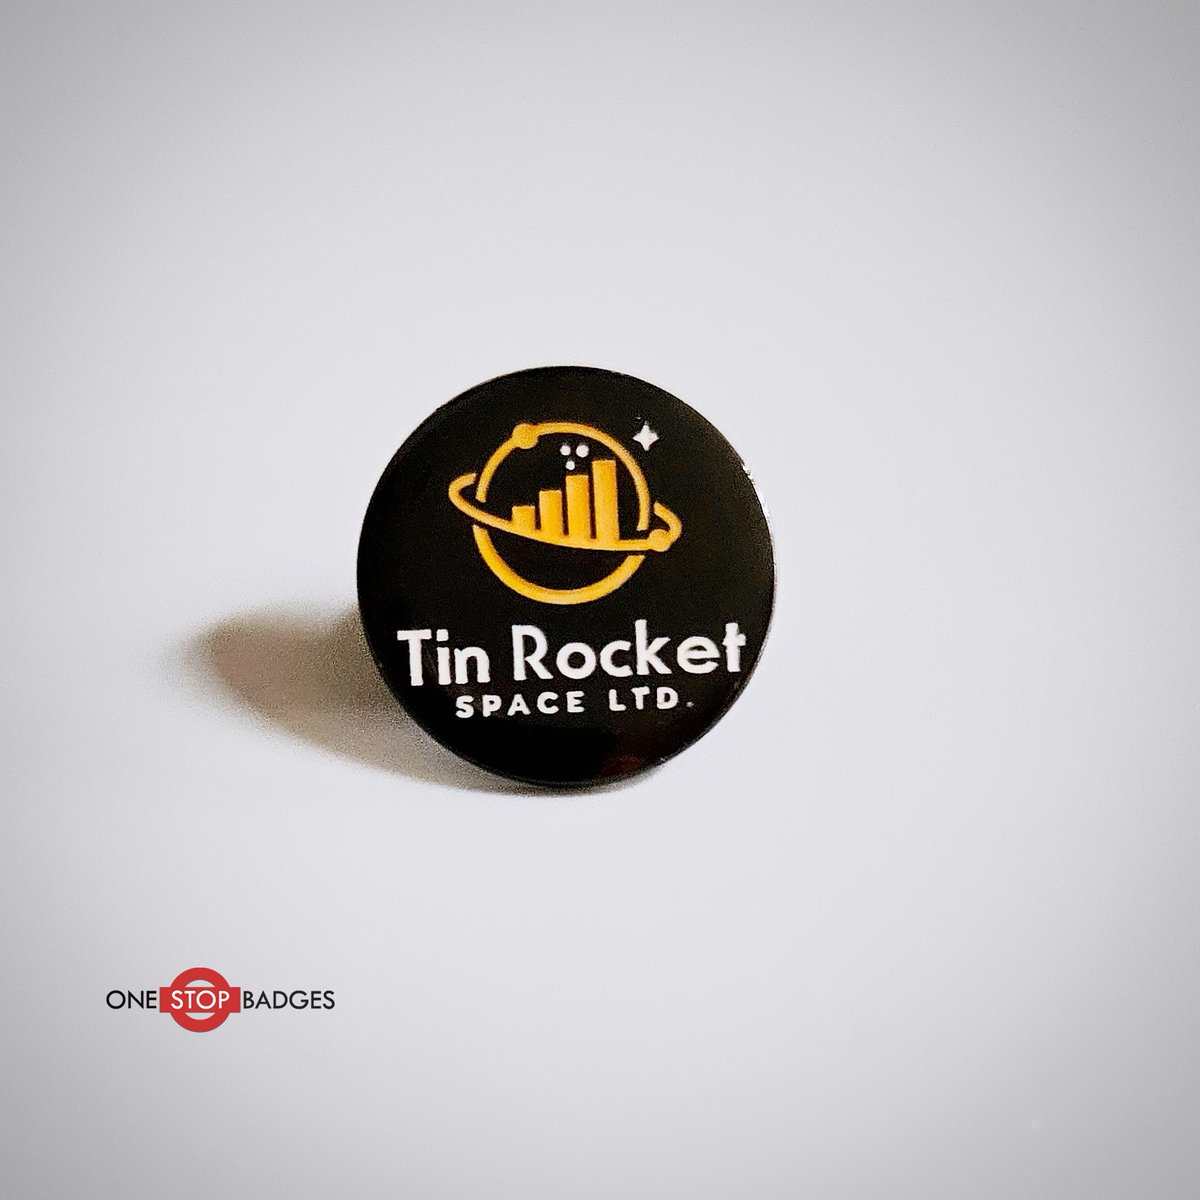 🚀🪐 Tin Rocket Space 🪐🚀

#Pinbadges #pins #badges #enamelpins #enamelpinbadges #enamelbadges #pindesign #lapelpin #custompins #pinaddict #custombadges #pinspinspins #pincommunity #pinworld #pinlife #personalisedpins